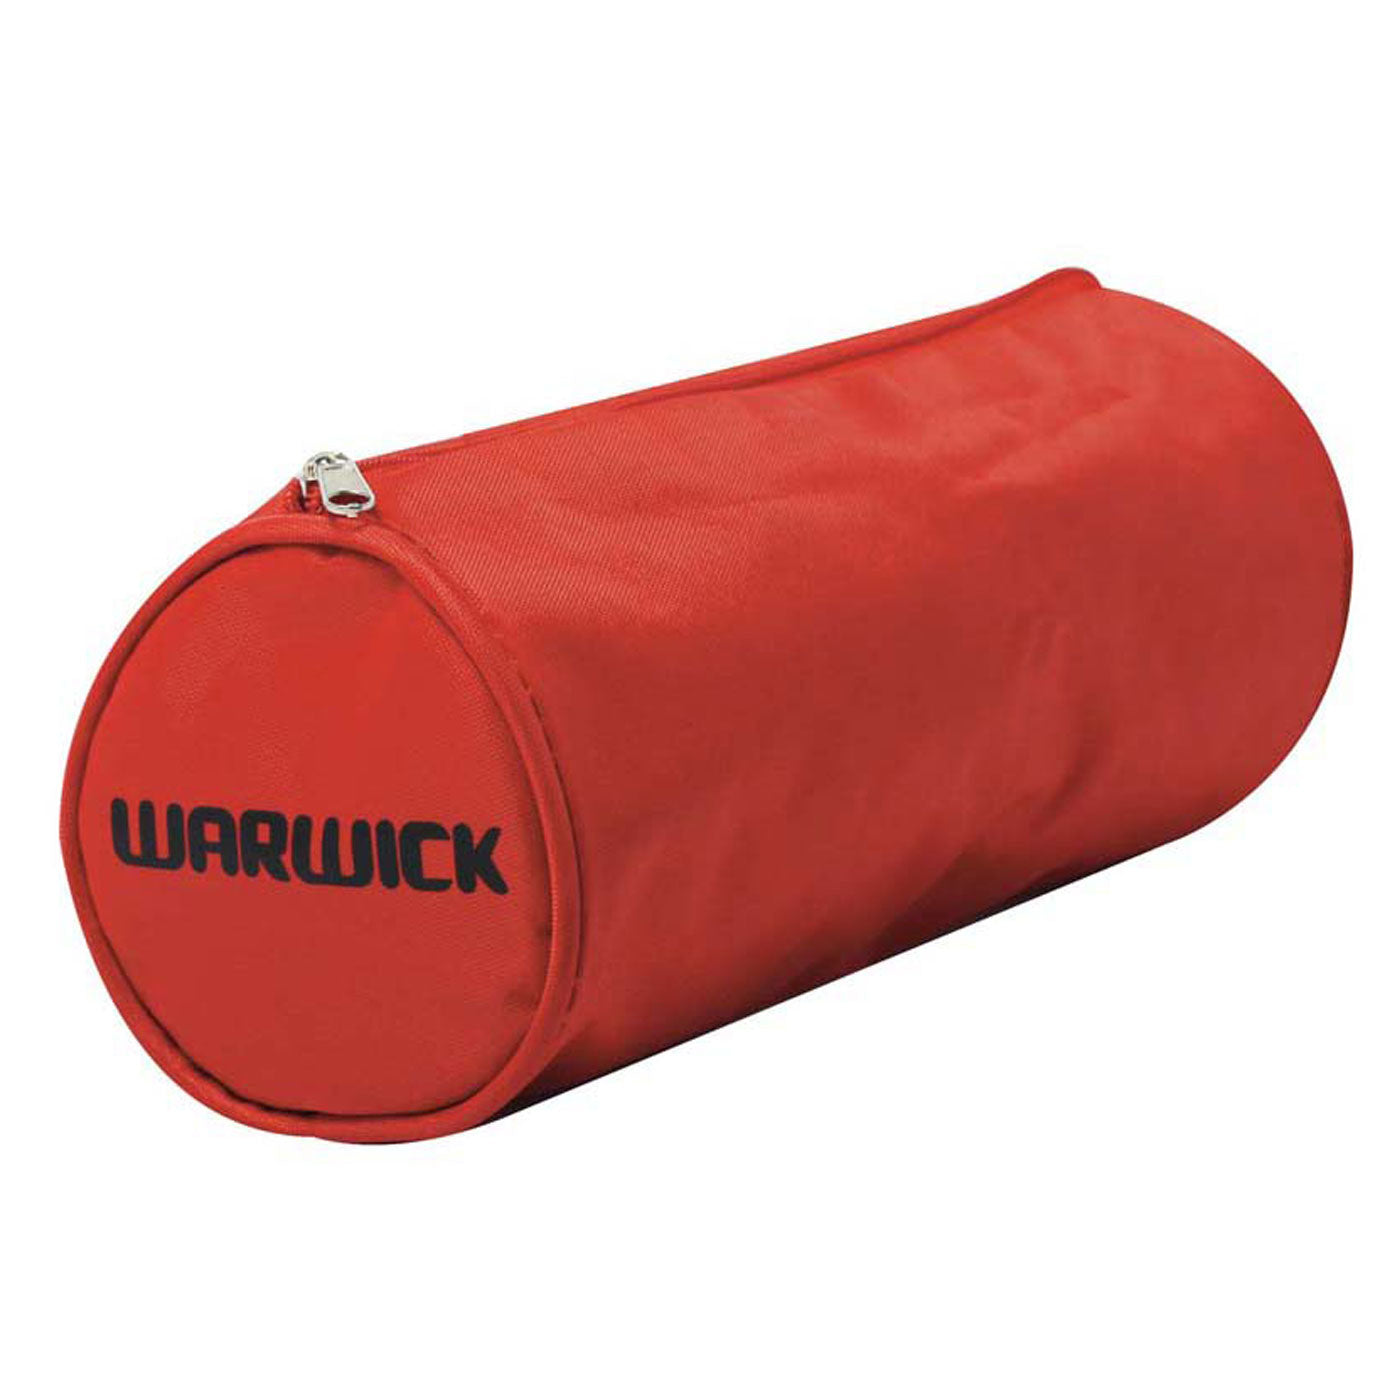 Warwick Pencil Case Barrel Large Red